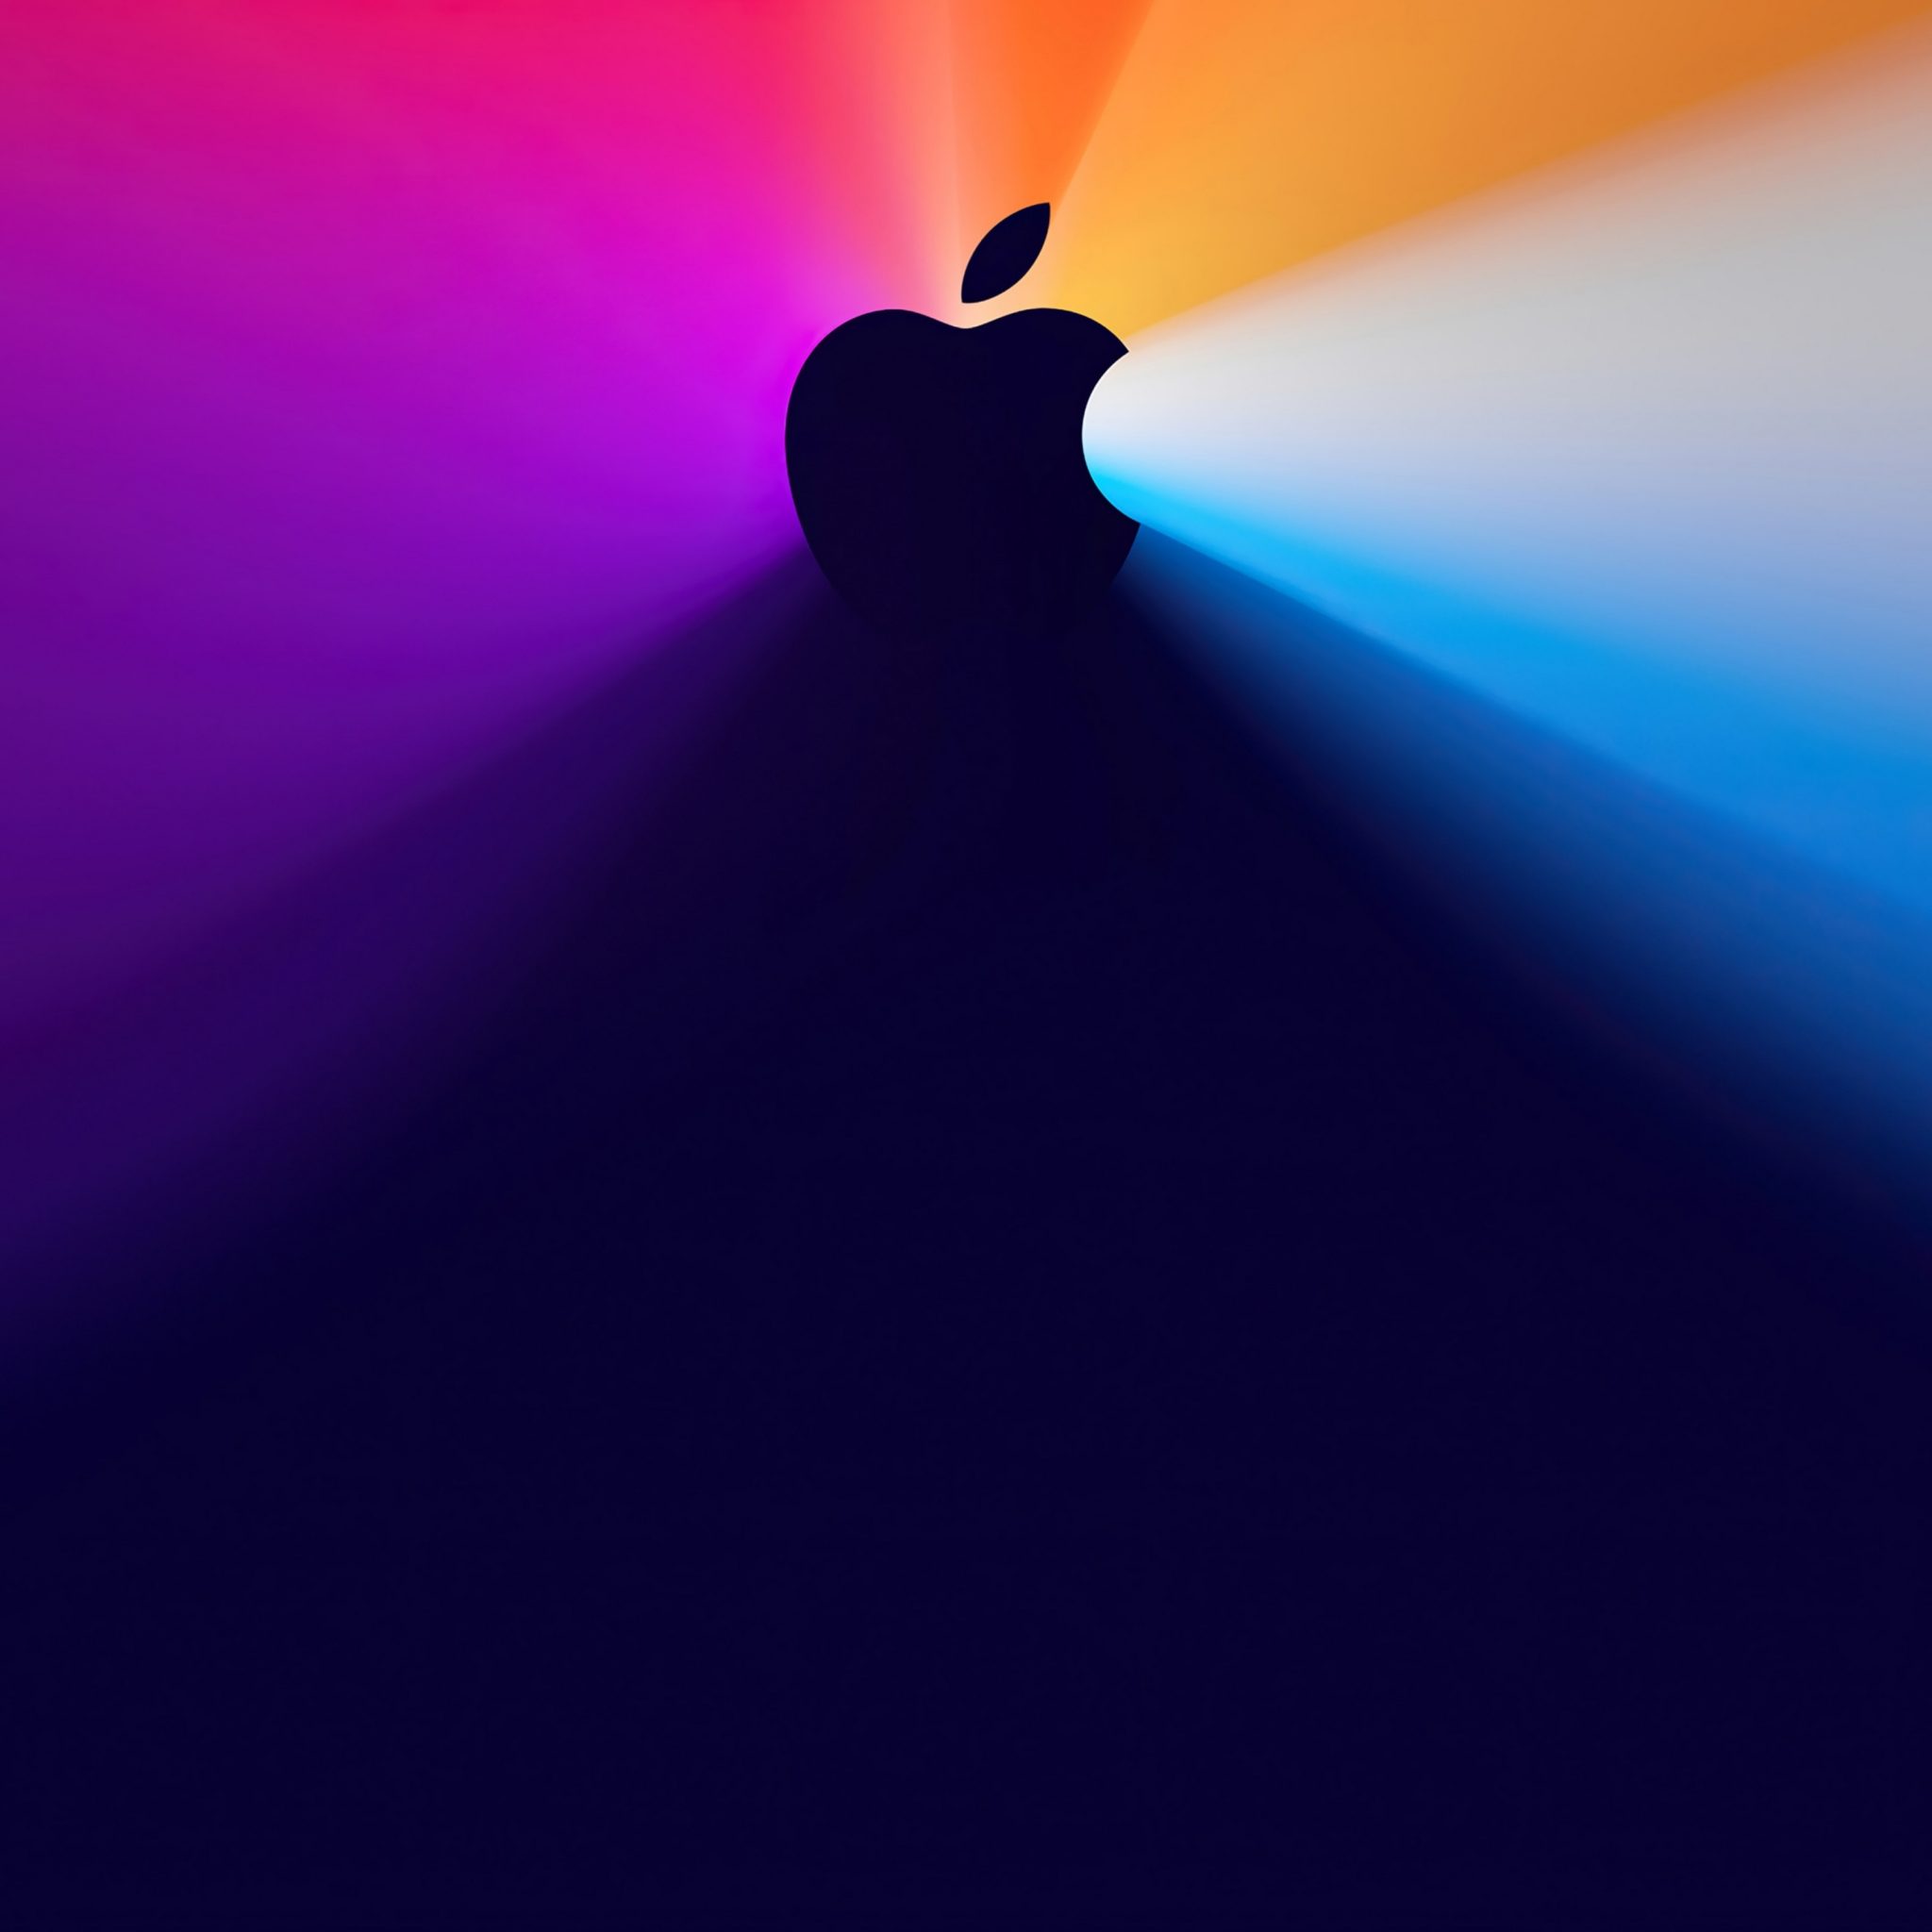 2048x2048 wallpapers iPad retina Colourful iPhone 12 Apple Logo iPad Wallpaper 2048x2048 pixels resolution